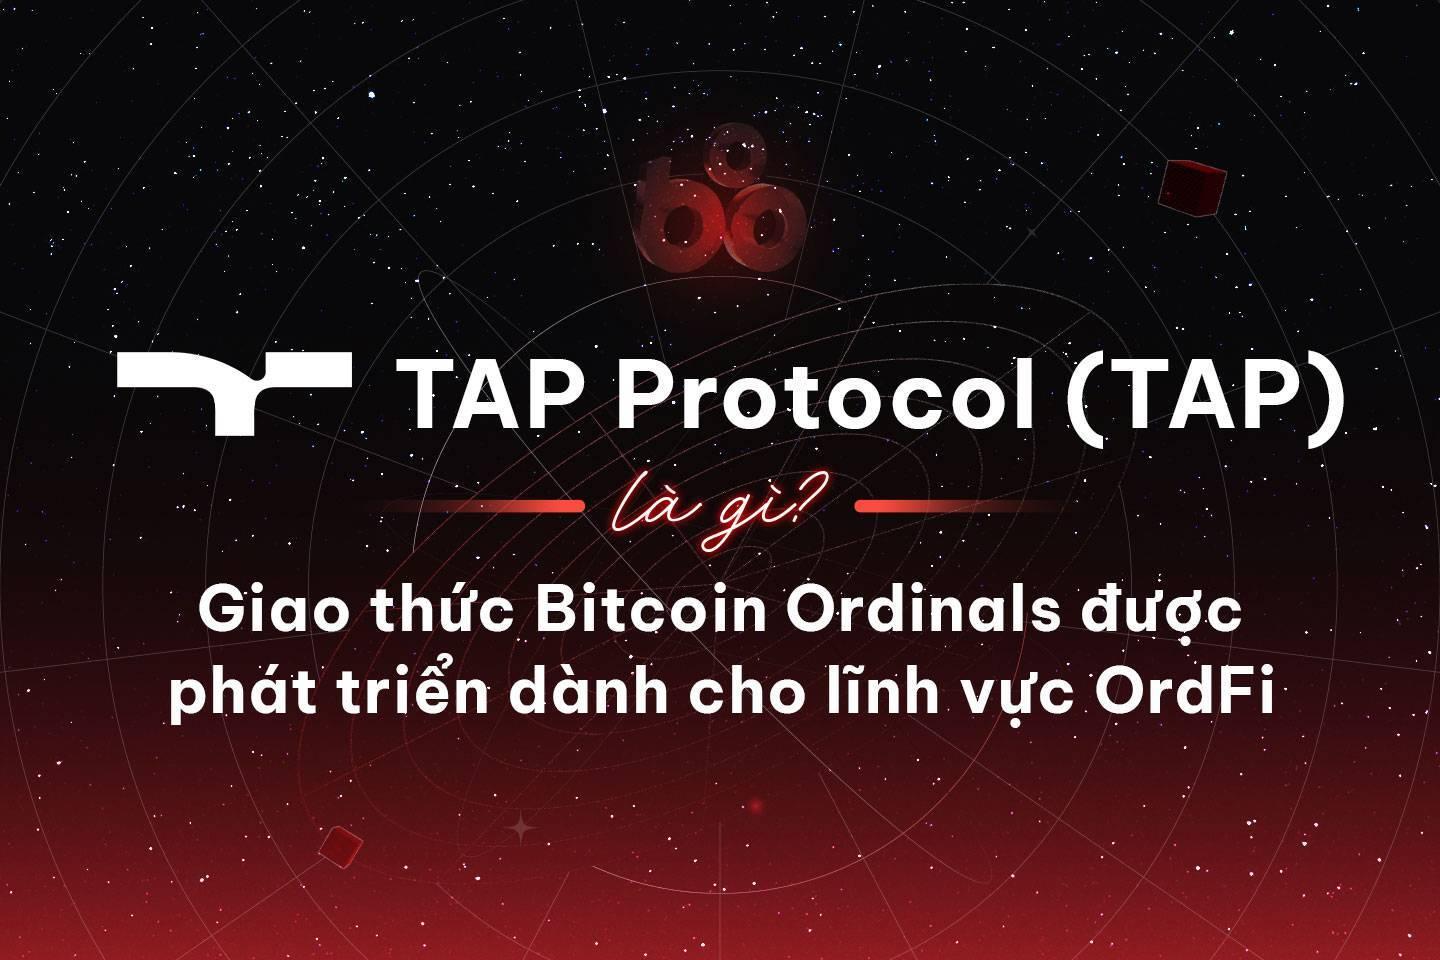 tap-protocol-tap-la-gi-giao-thuc-bitcoin-ordinals-duoc-phat-trien-danh-cho-linh-vuc-ordfi